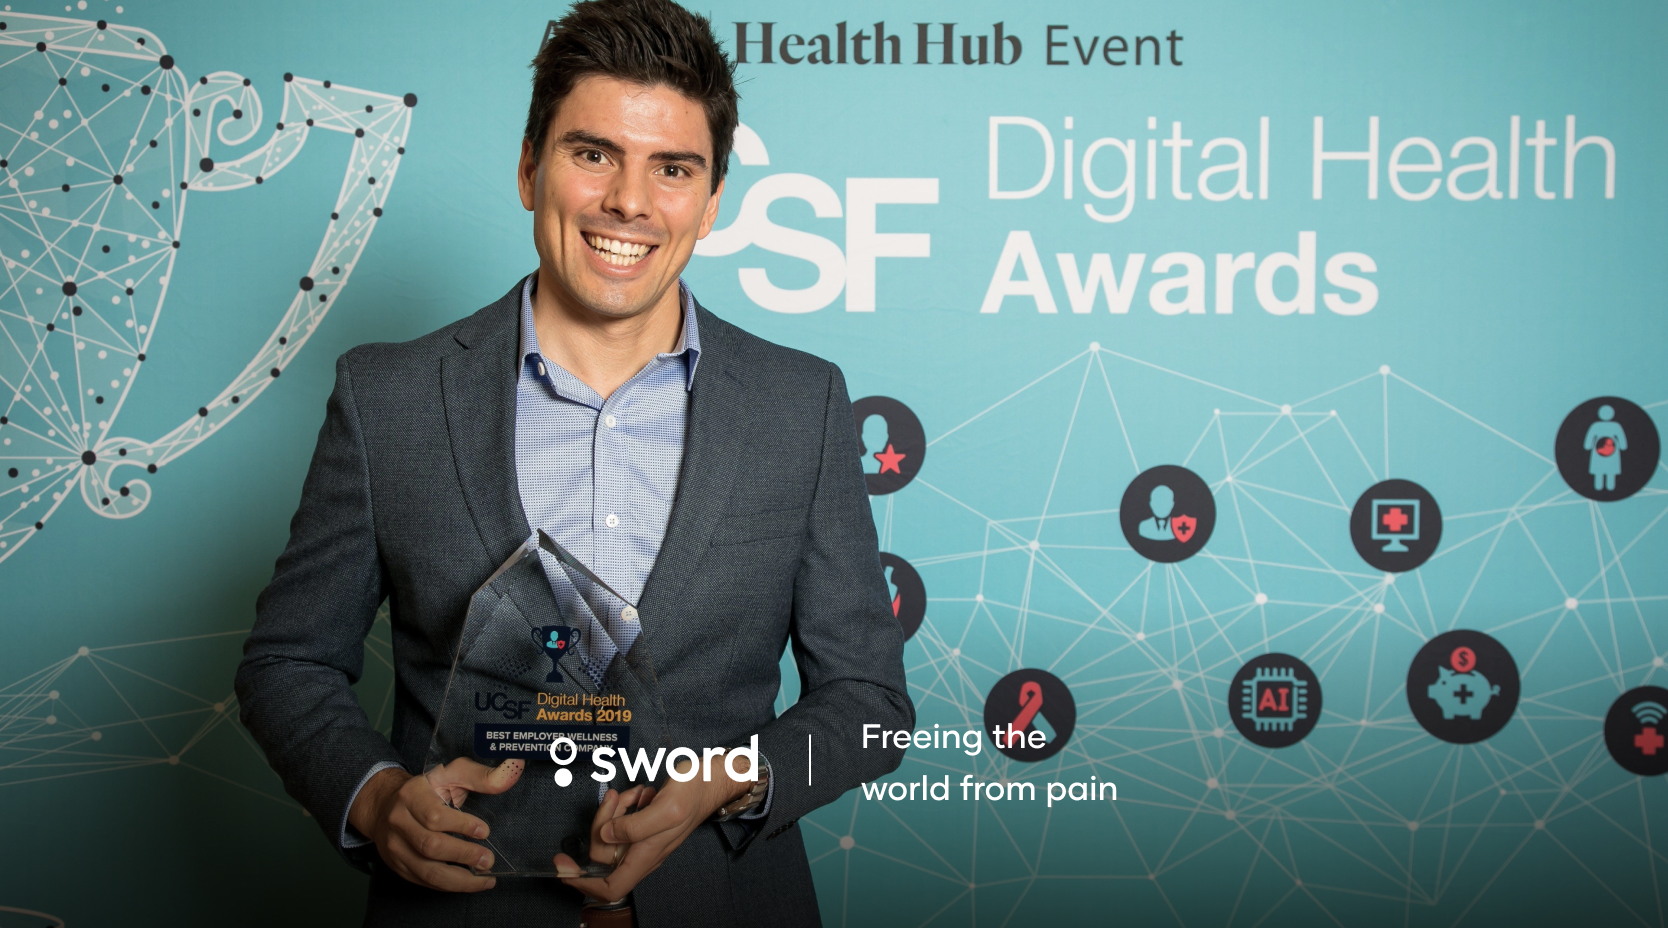 UCSF Digital Health Awards 2019: Best Employer Wellness & Prevention Company